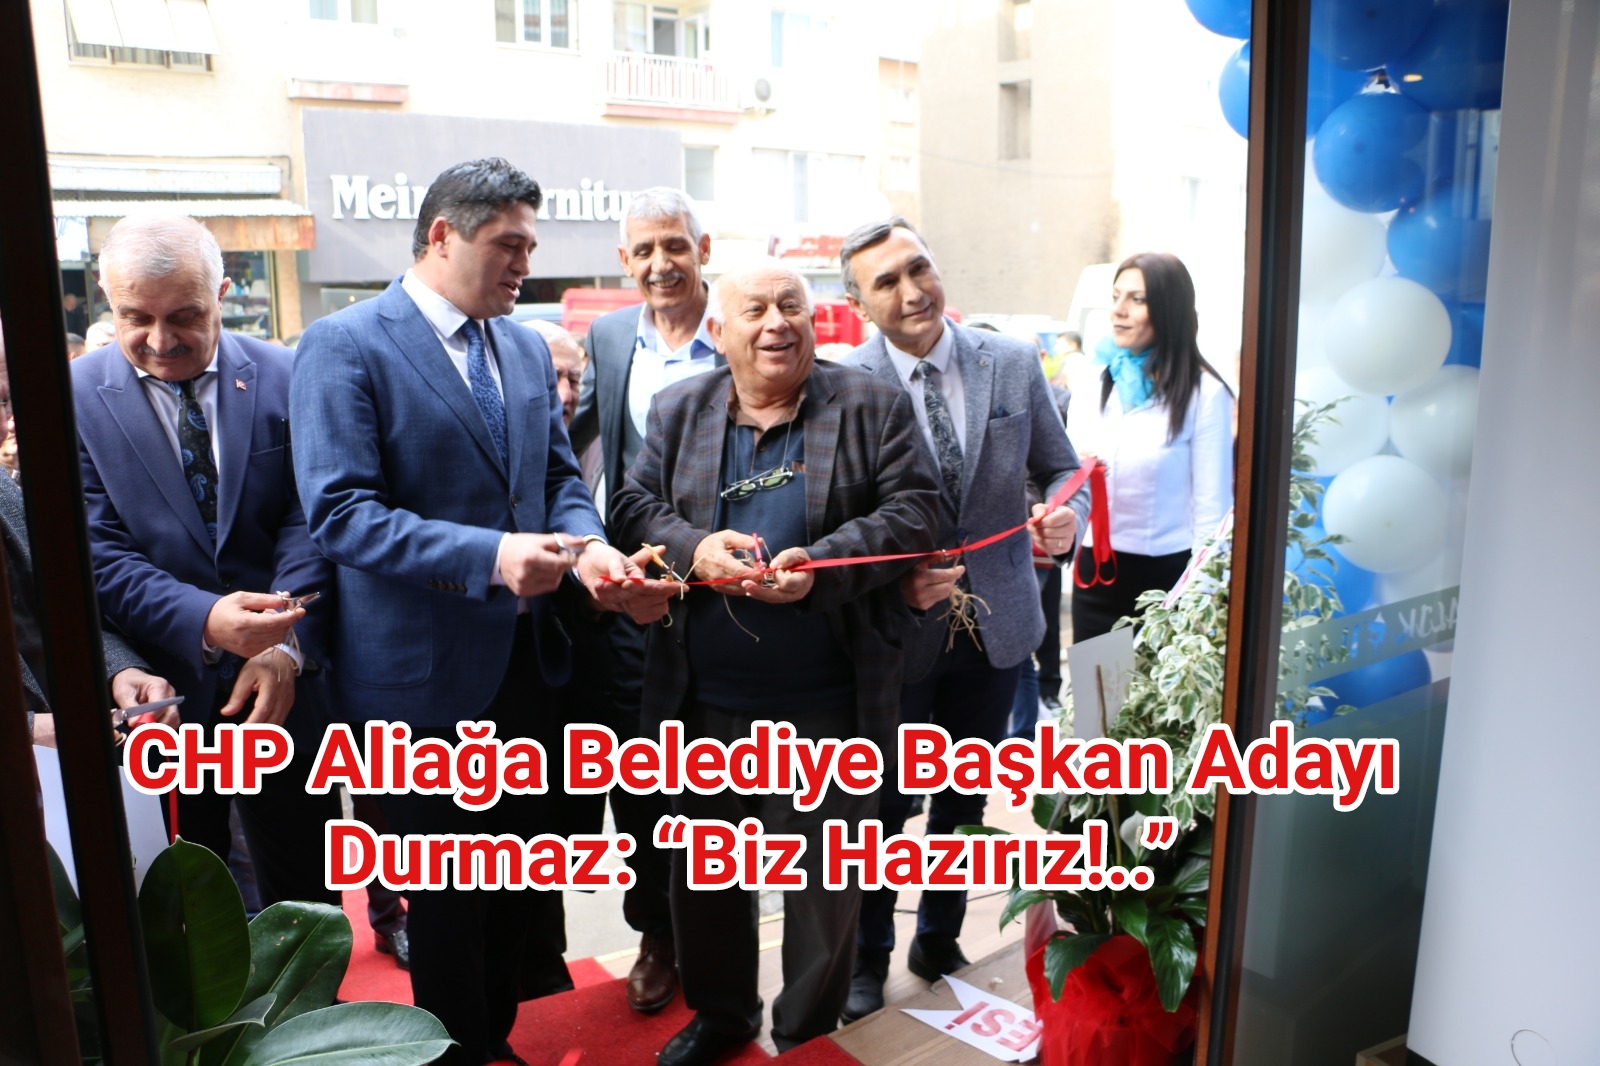 CHP Aliağa Belediye Başkan Adayı Durmaz: “Biz Hazırız!..”